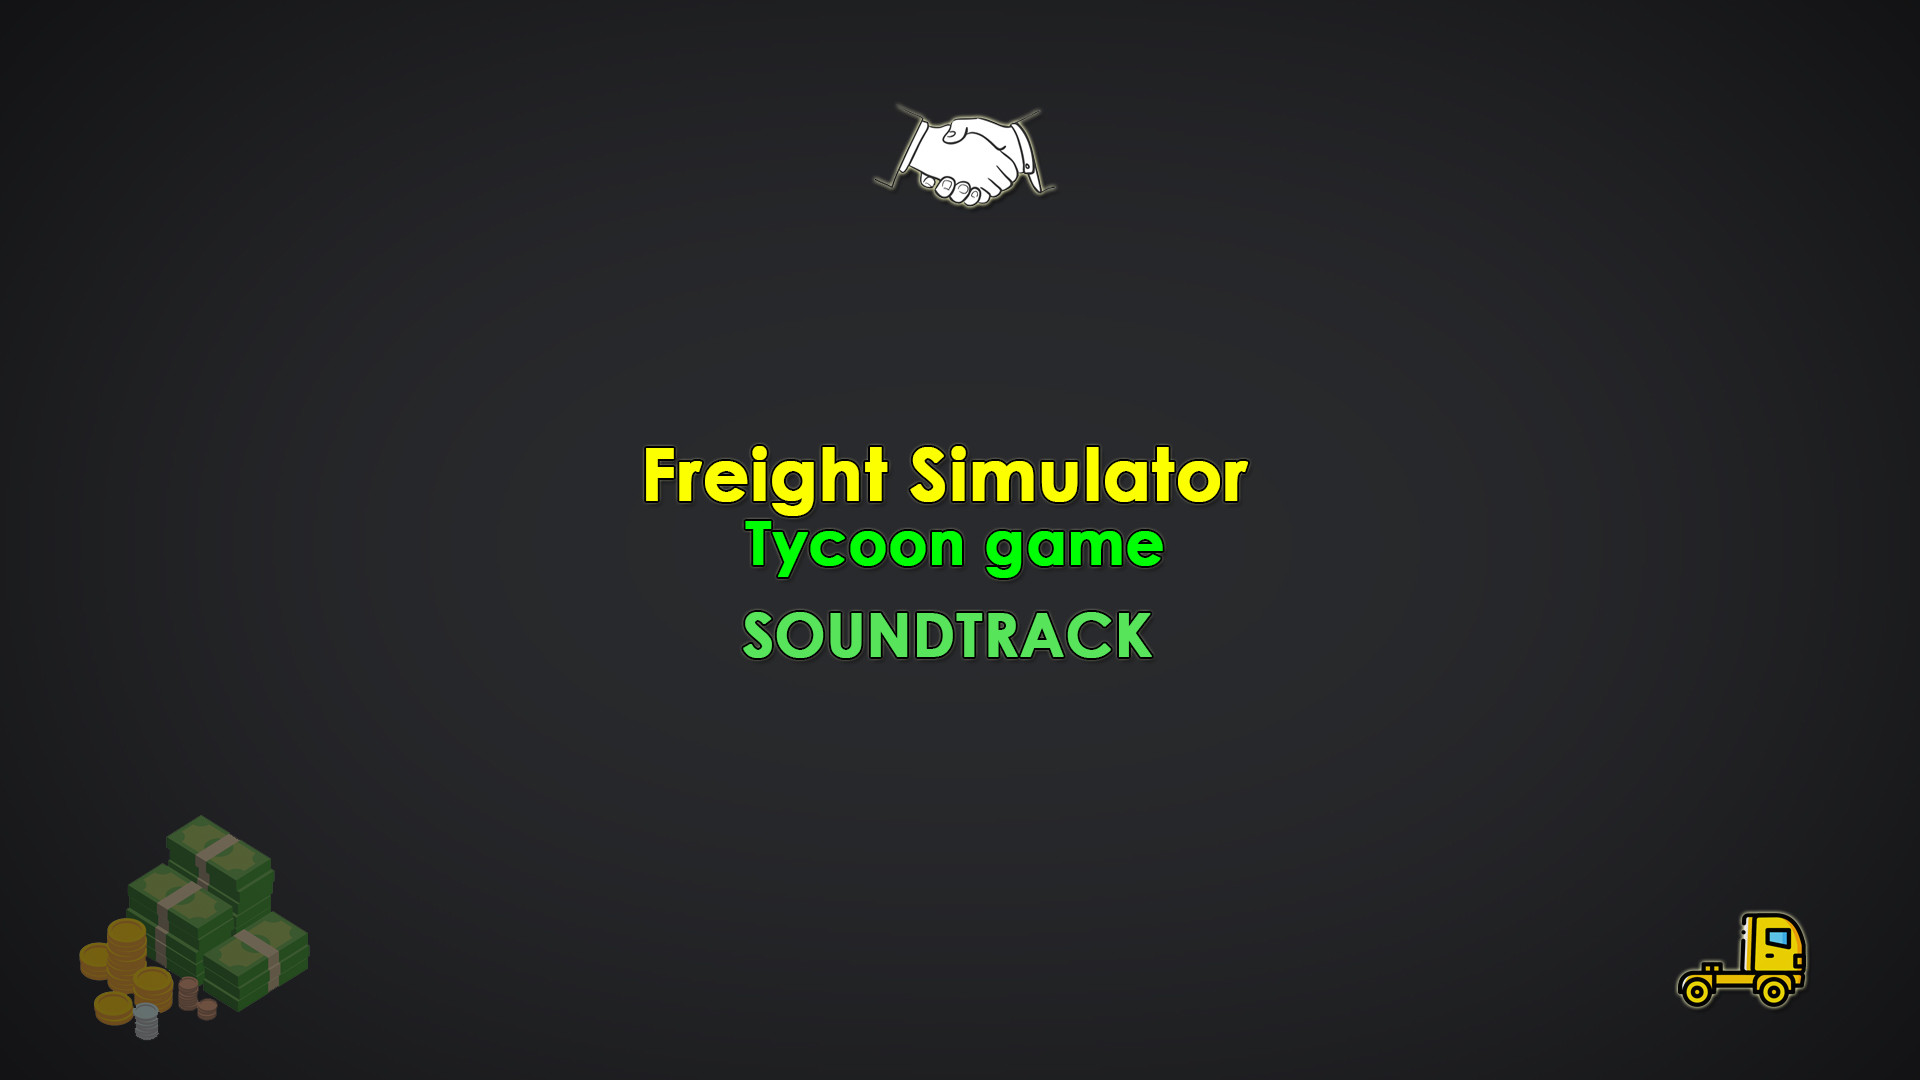 Freight Simulator: Soundtrack Featured Screenshot #1